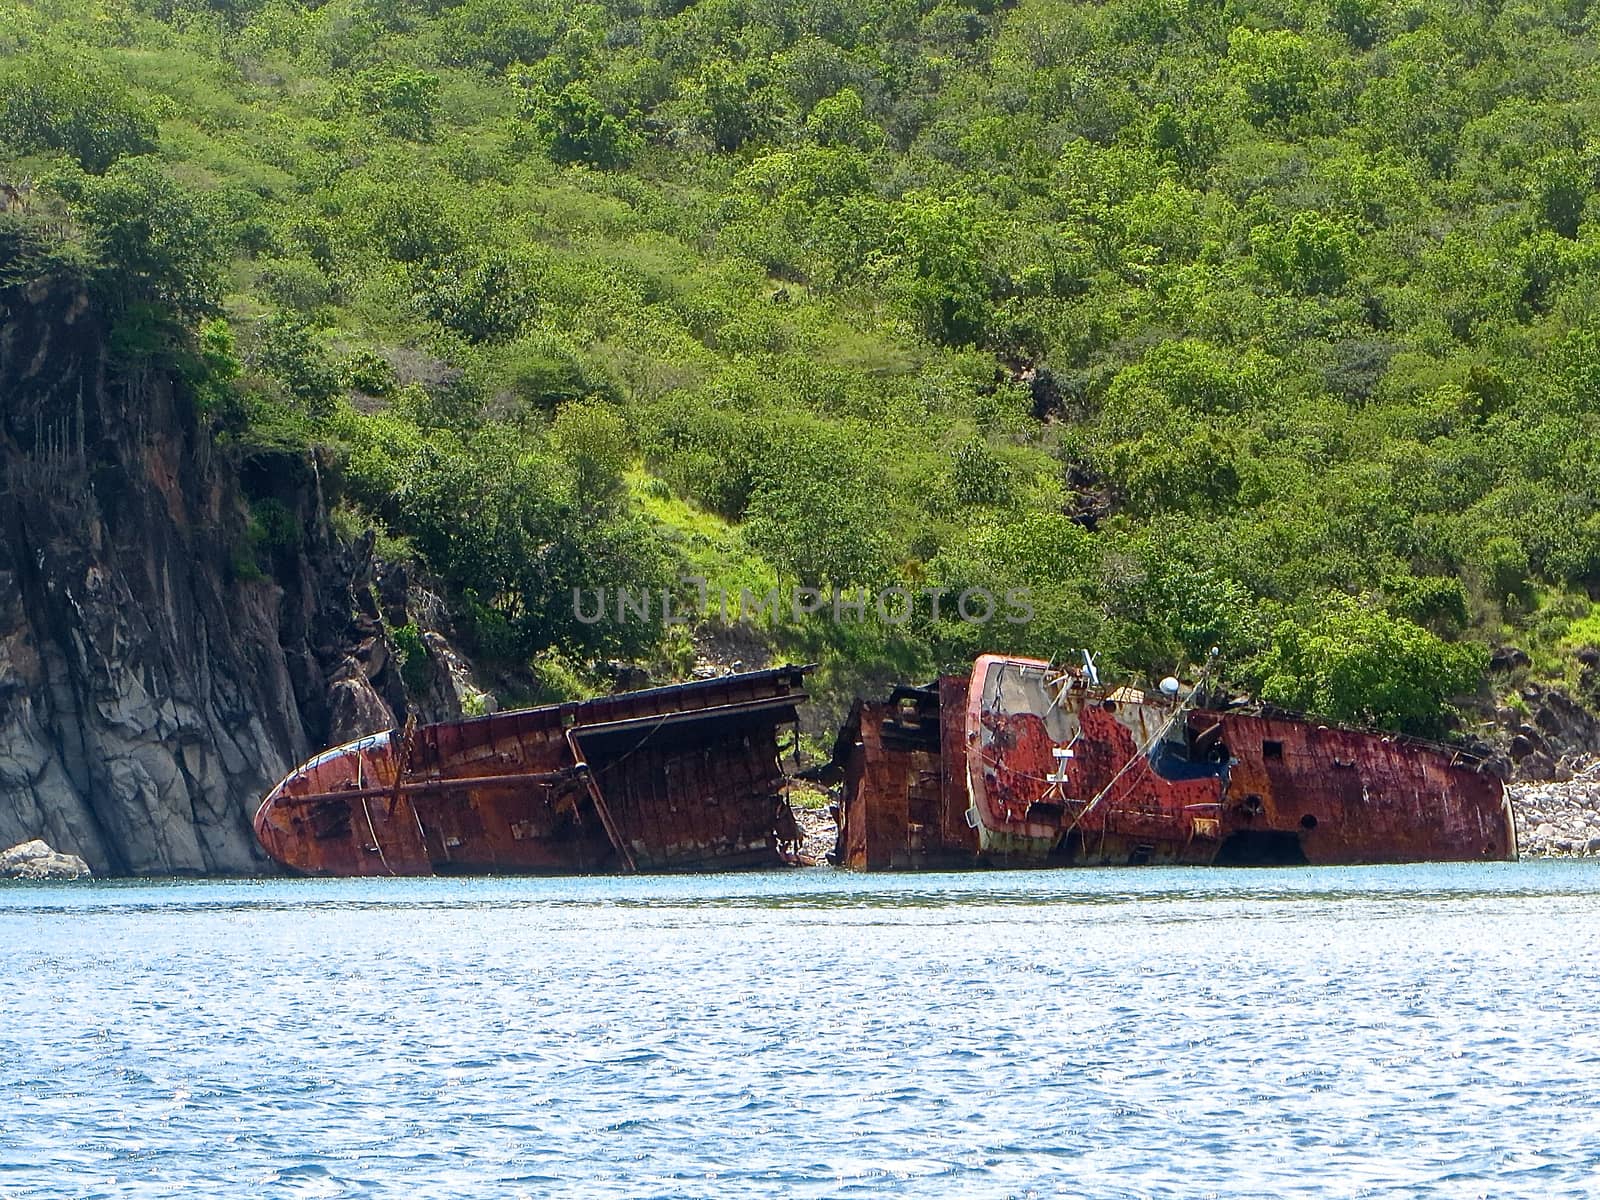 Shipwreck off St. Kitts by teacherdad48@yahoo.com